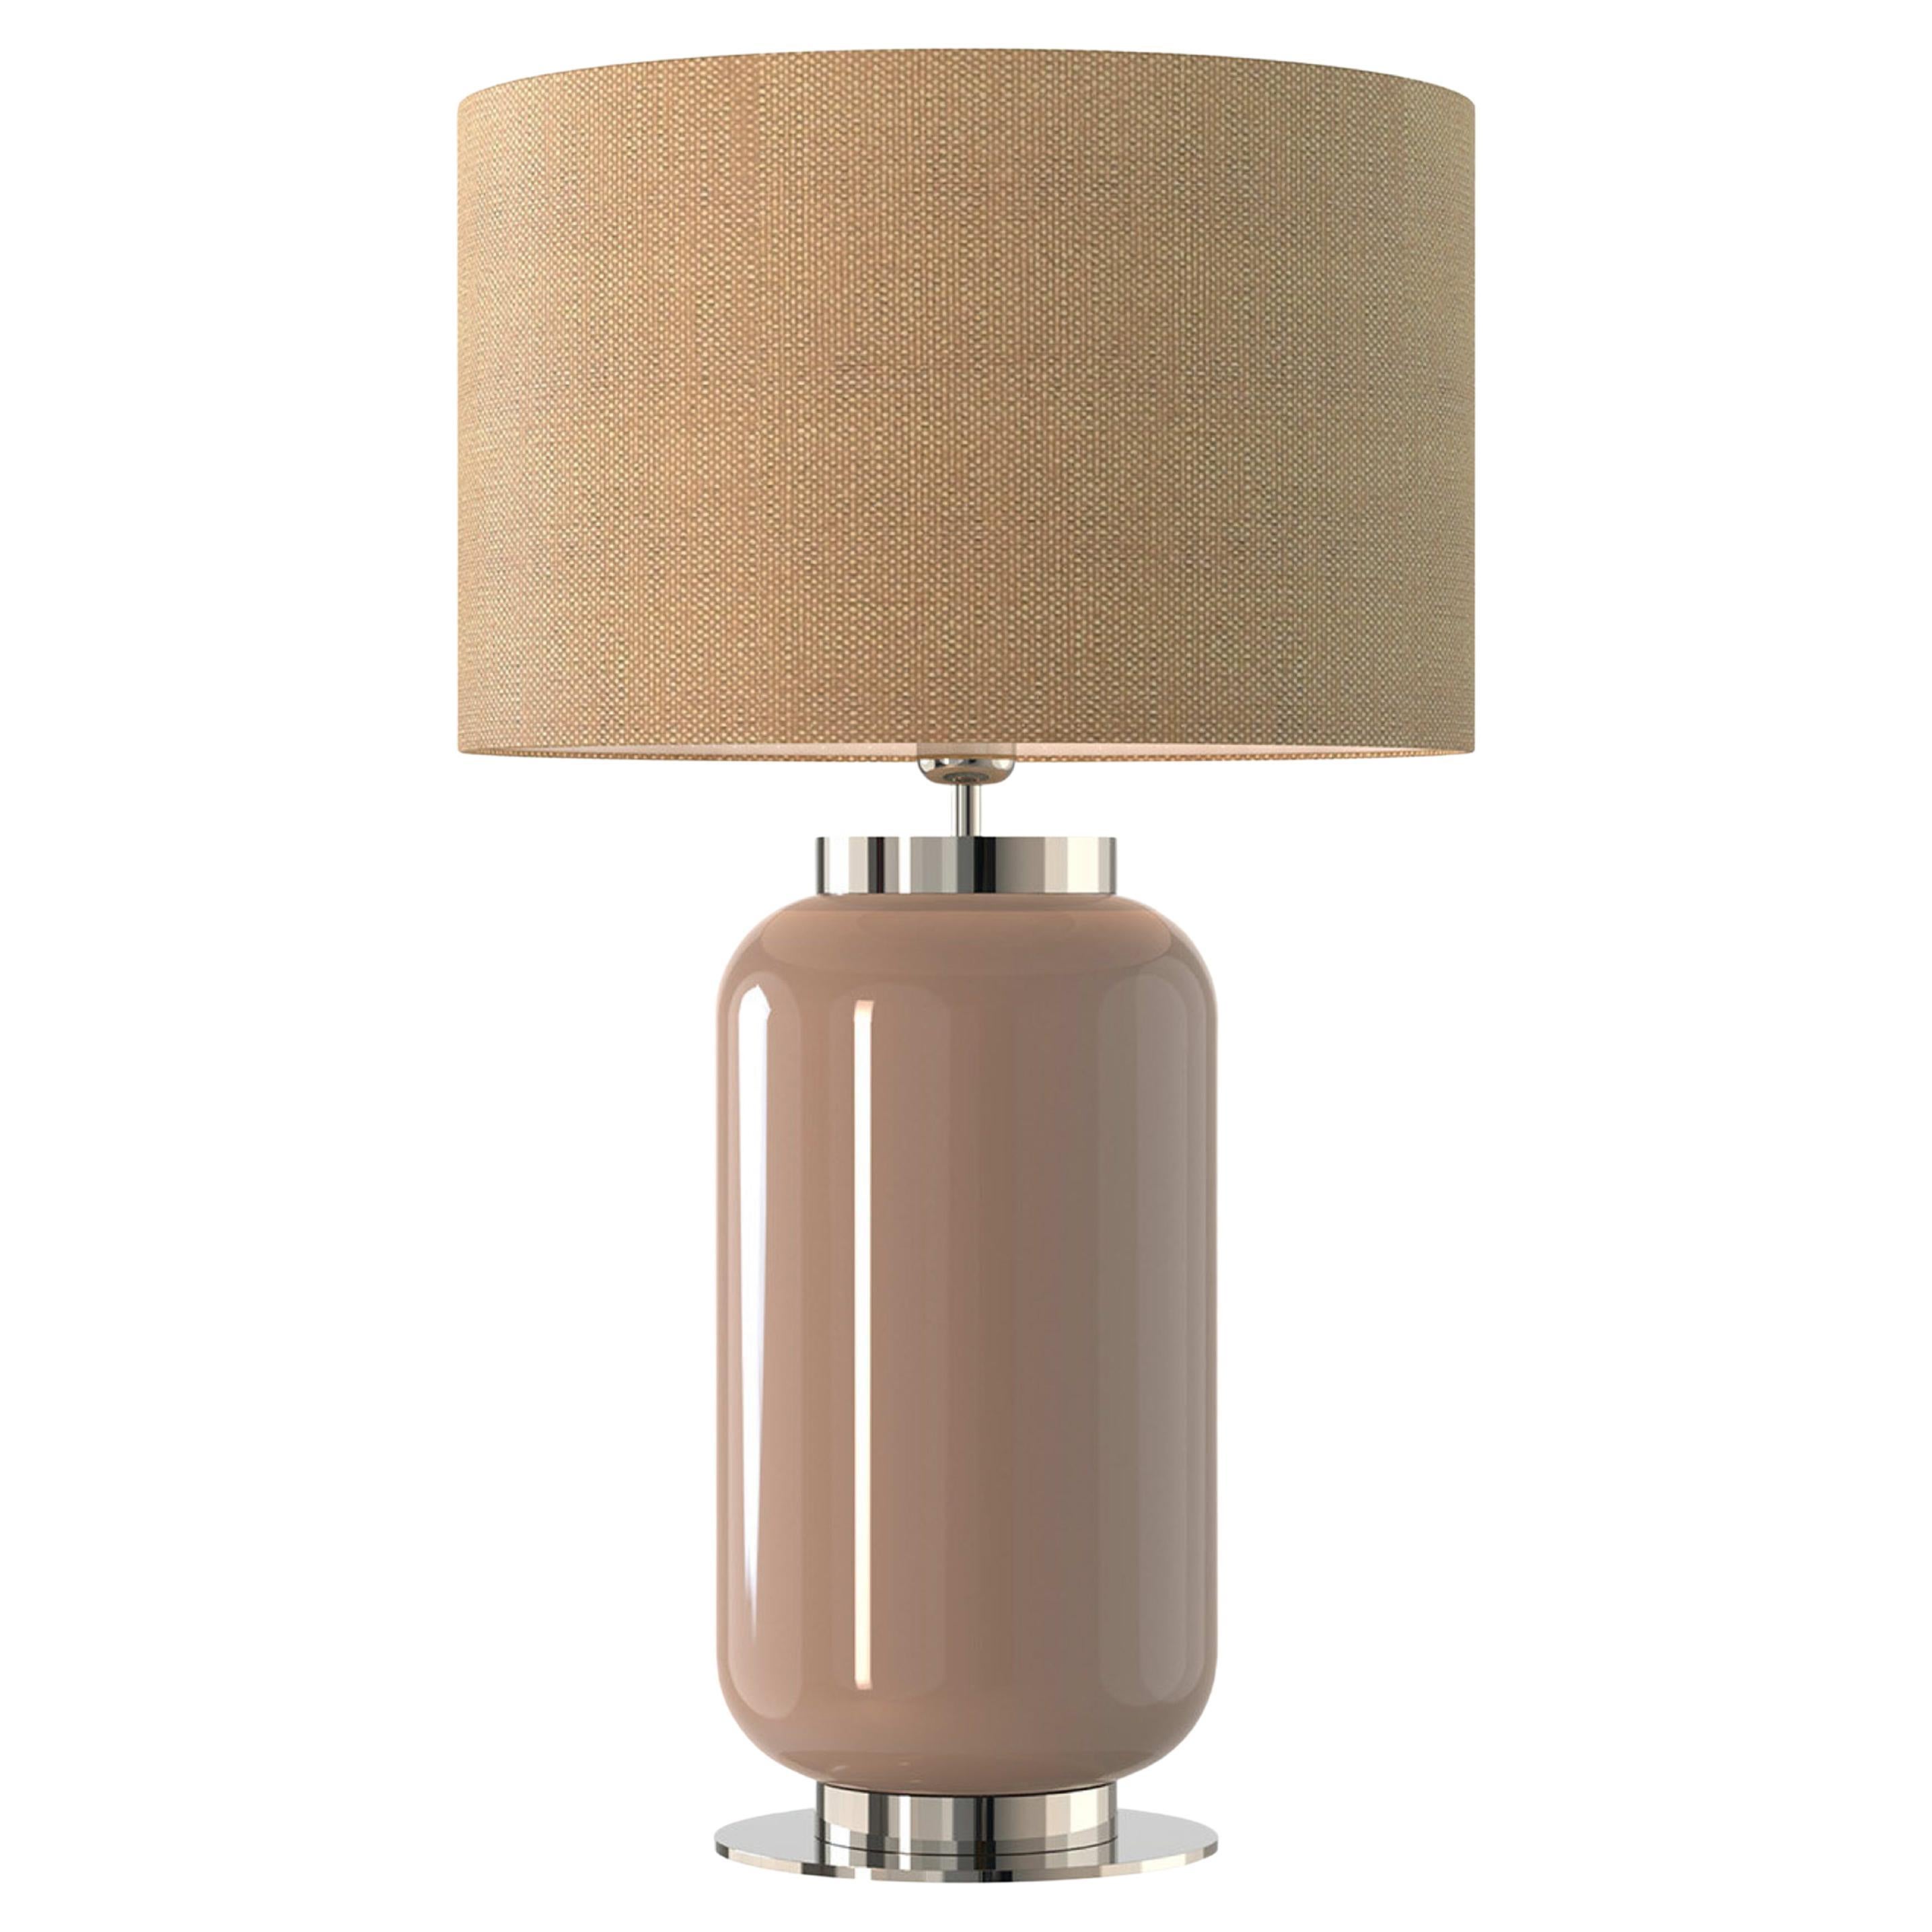 Ducas Table Lamp #2 For Sale